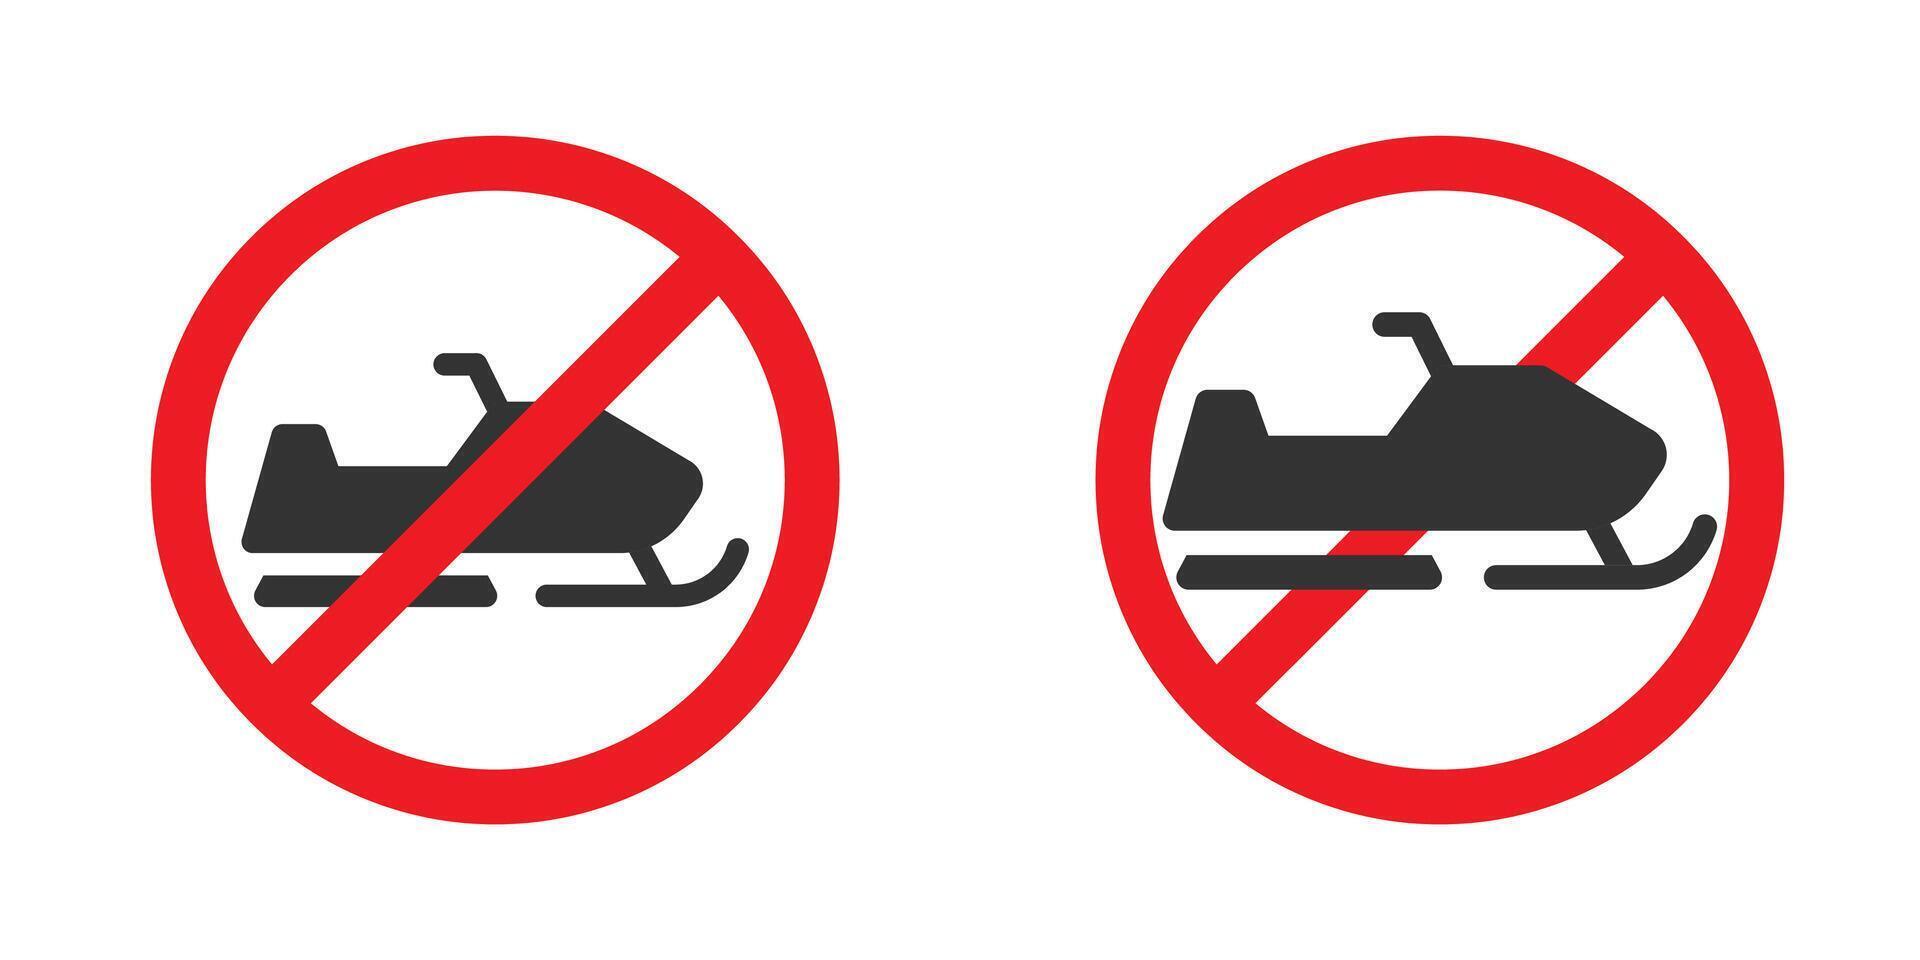 Forbidden snowmobiles sign. Vector illustration.